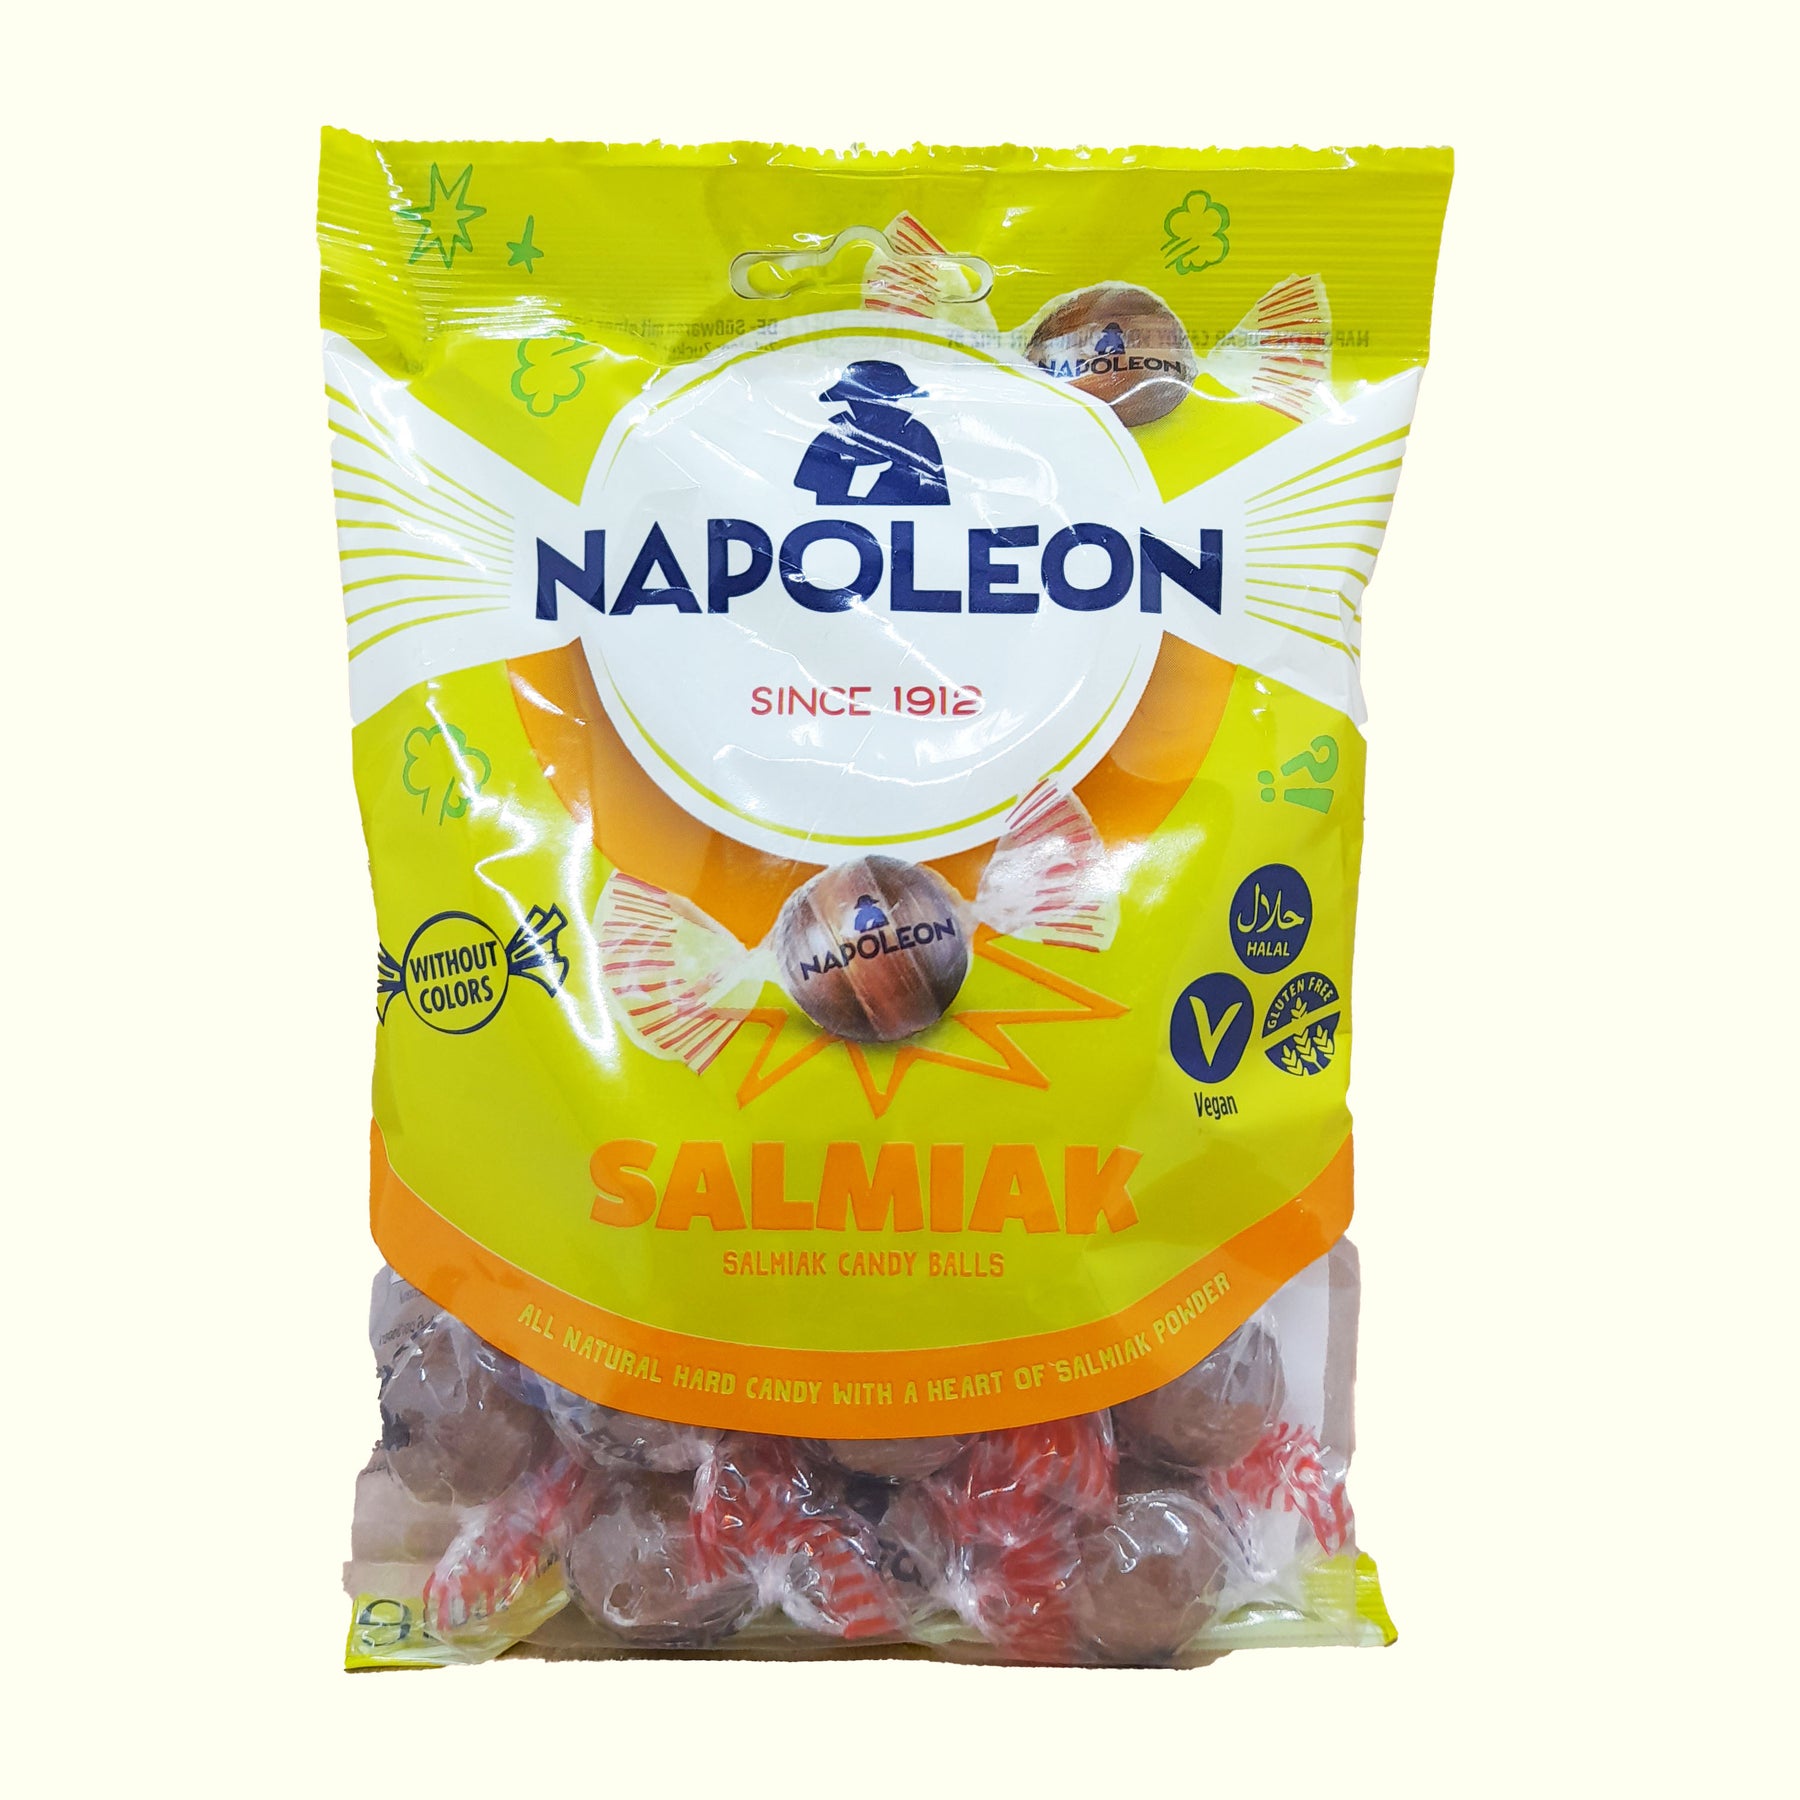 Napoleon Salmiak Bonbons mit einer Salmiaksalzfüllung - 130g